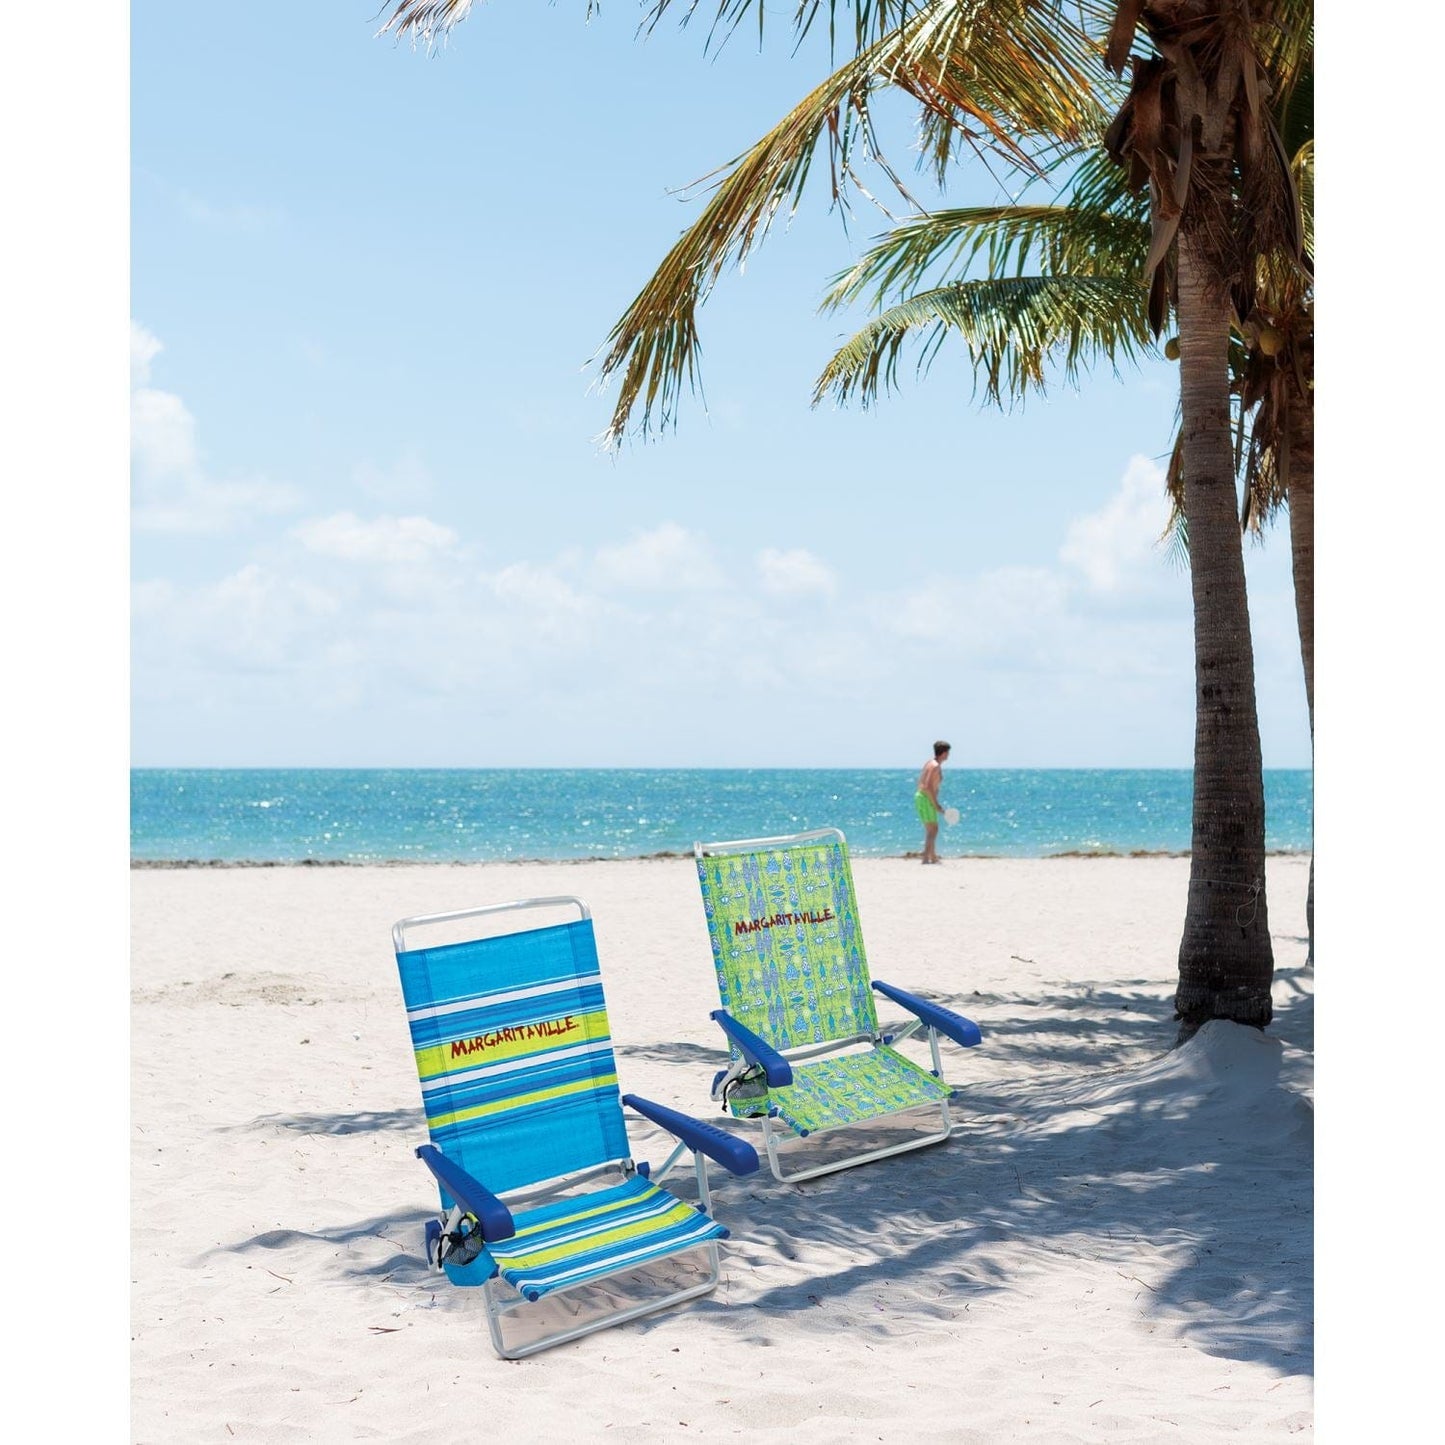 Margaritaville Beach Chair Margaritaville | 5-Position Beach Chair - Blue Stripe SC196MV-504-1